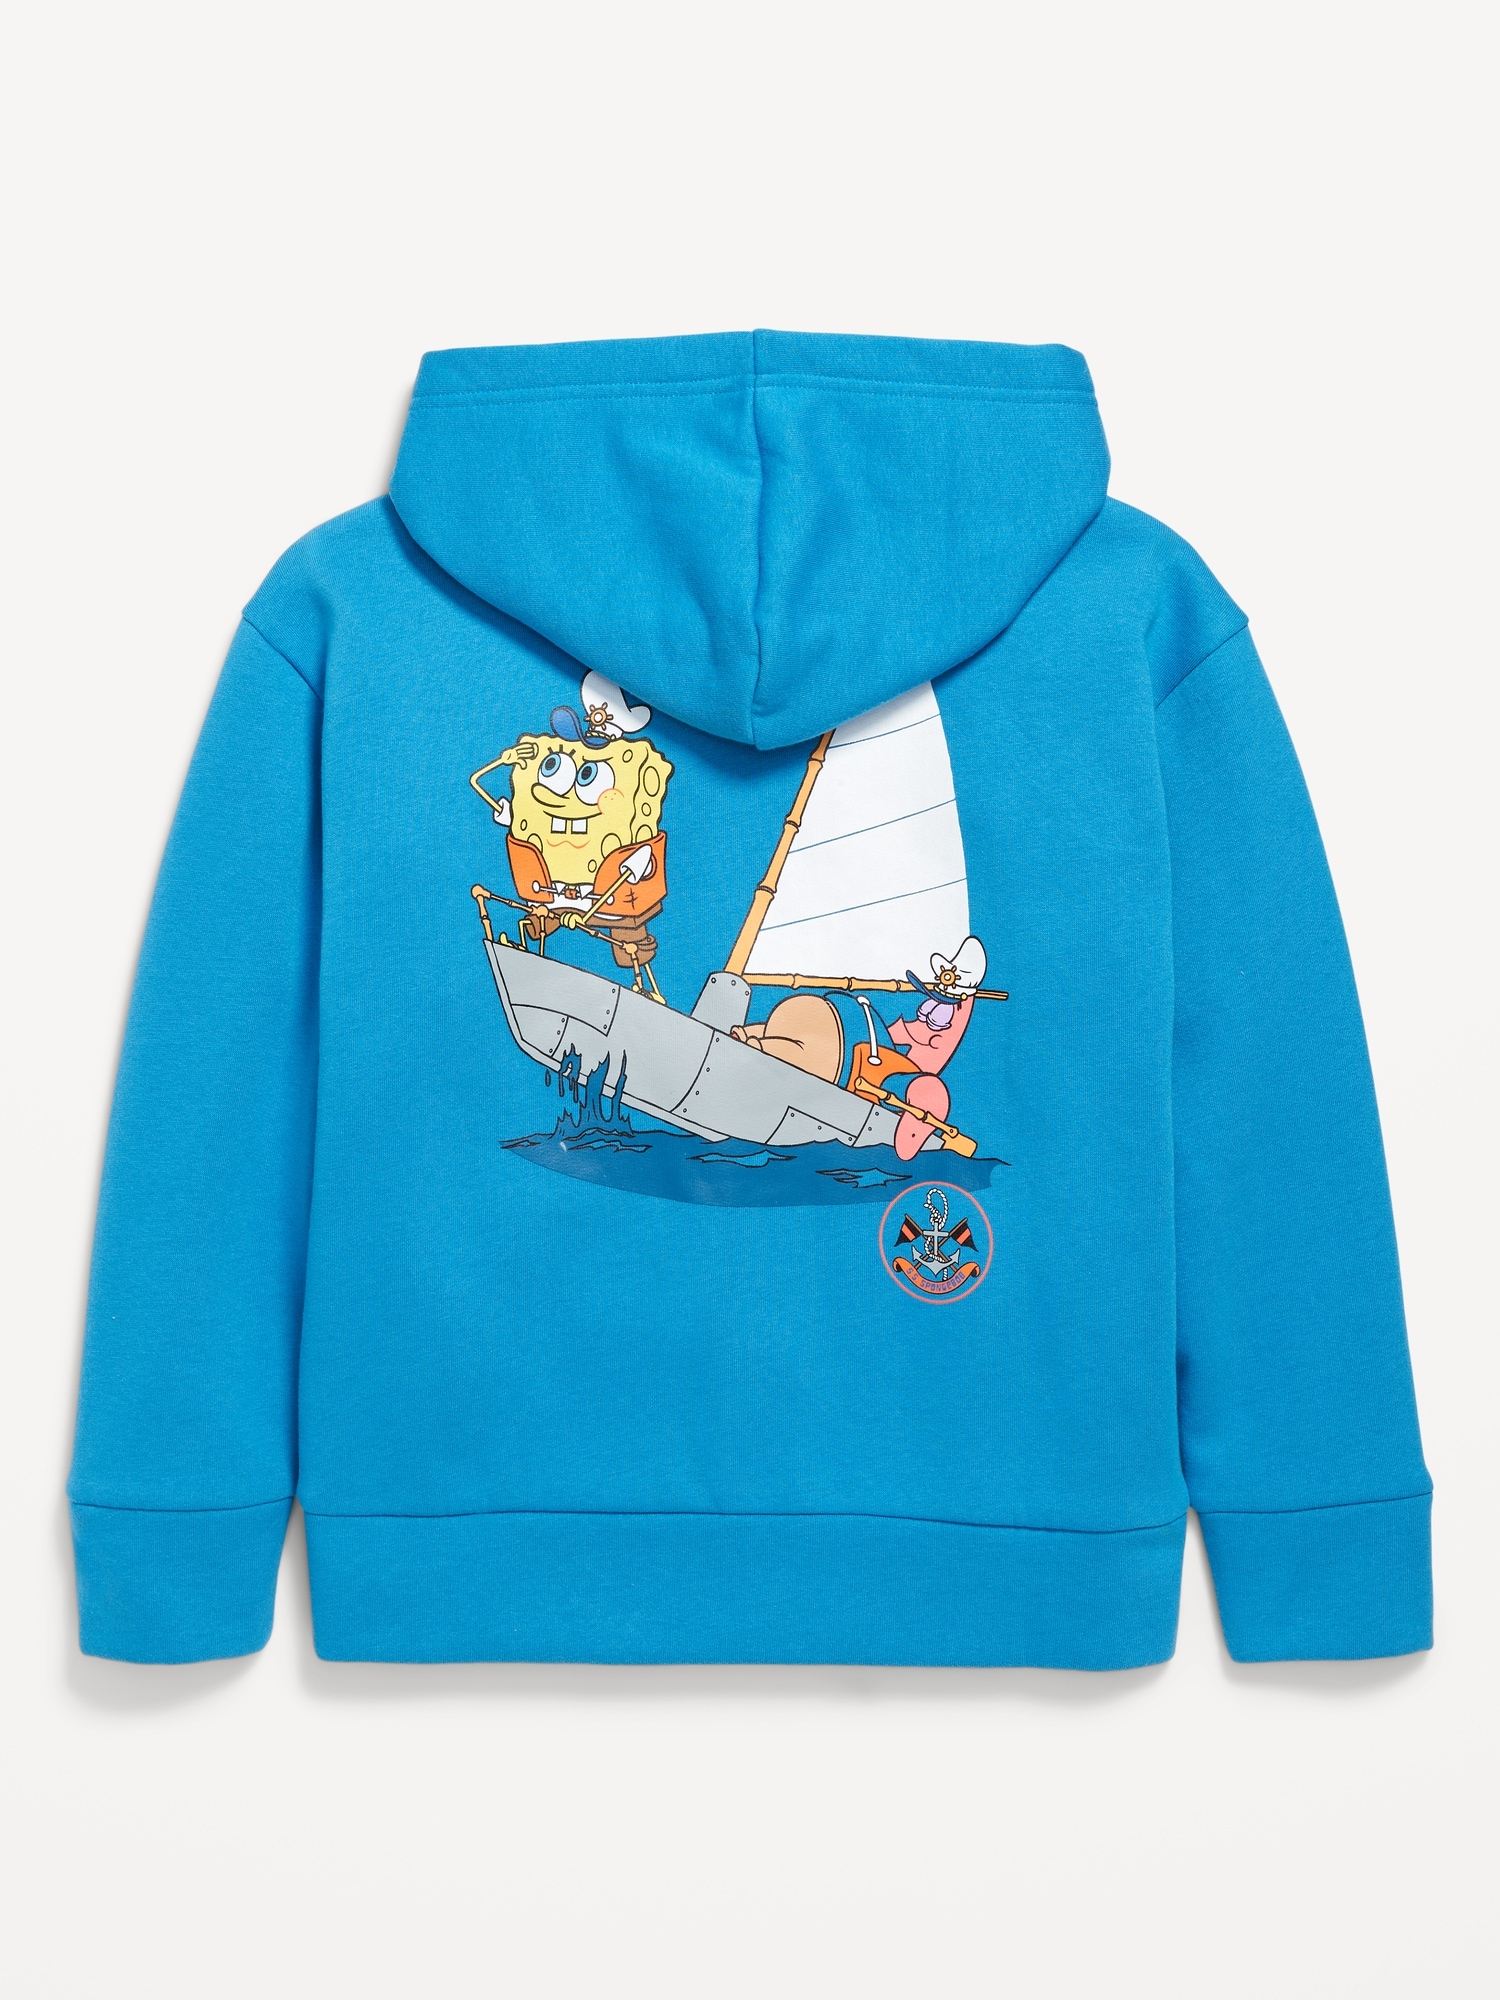 SpongeBob SquarePants™ Gender-Neutral Graphic Pullover Hoodie for Kids